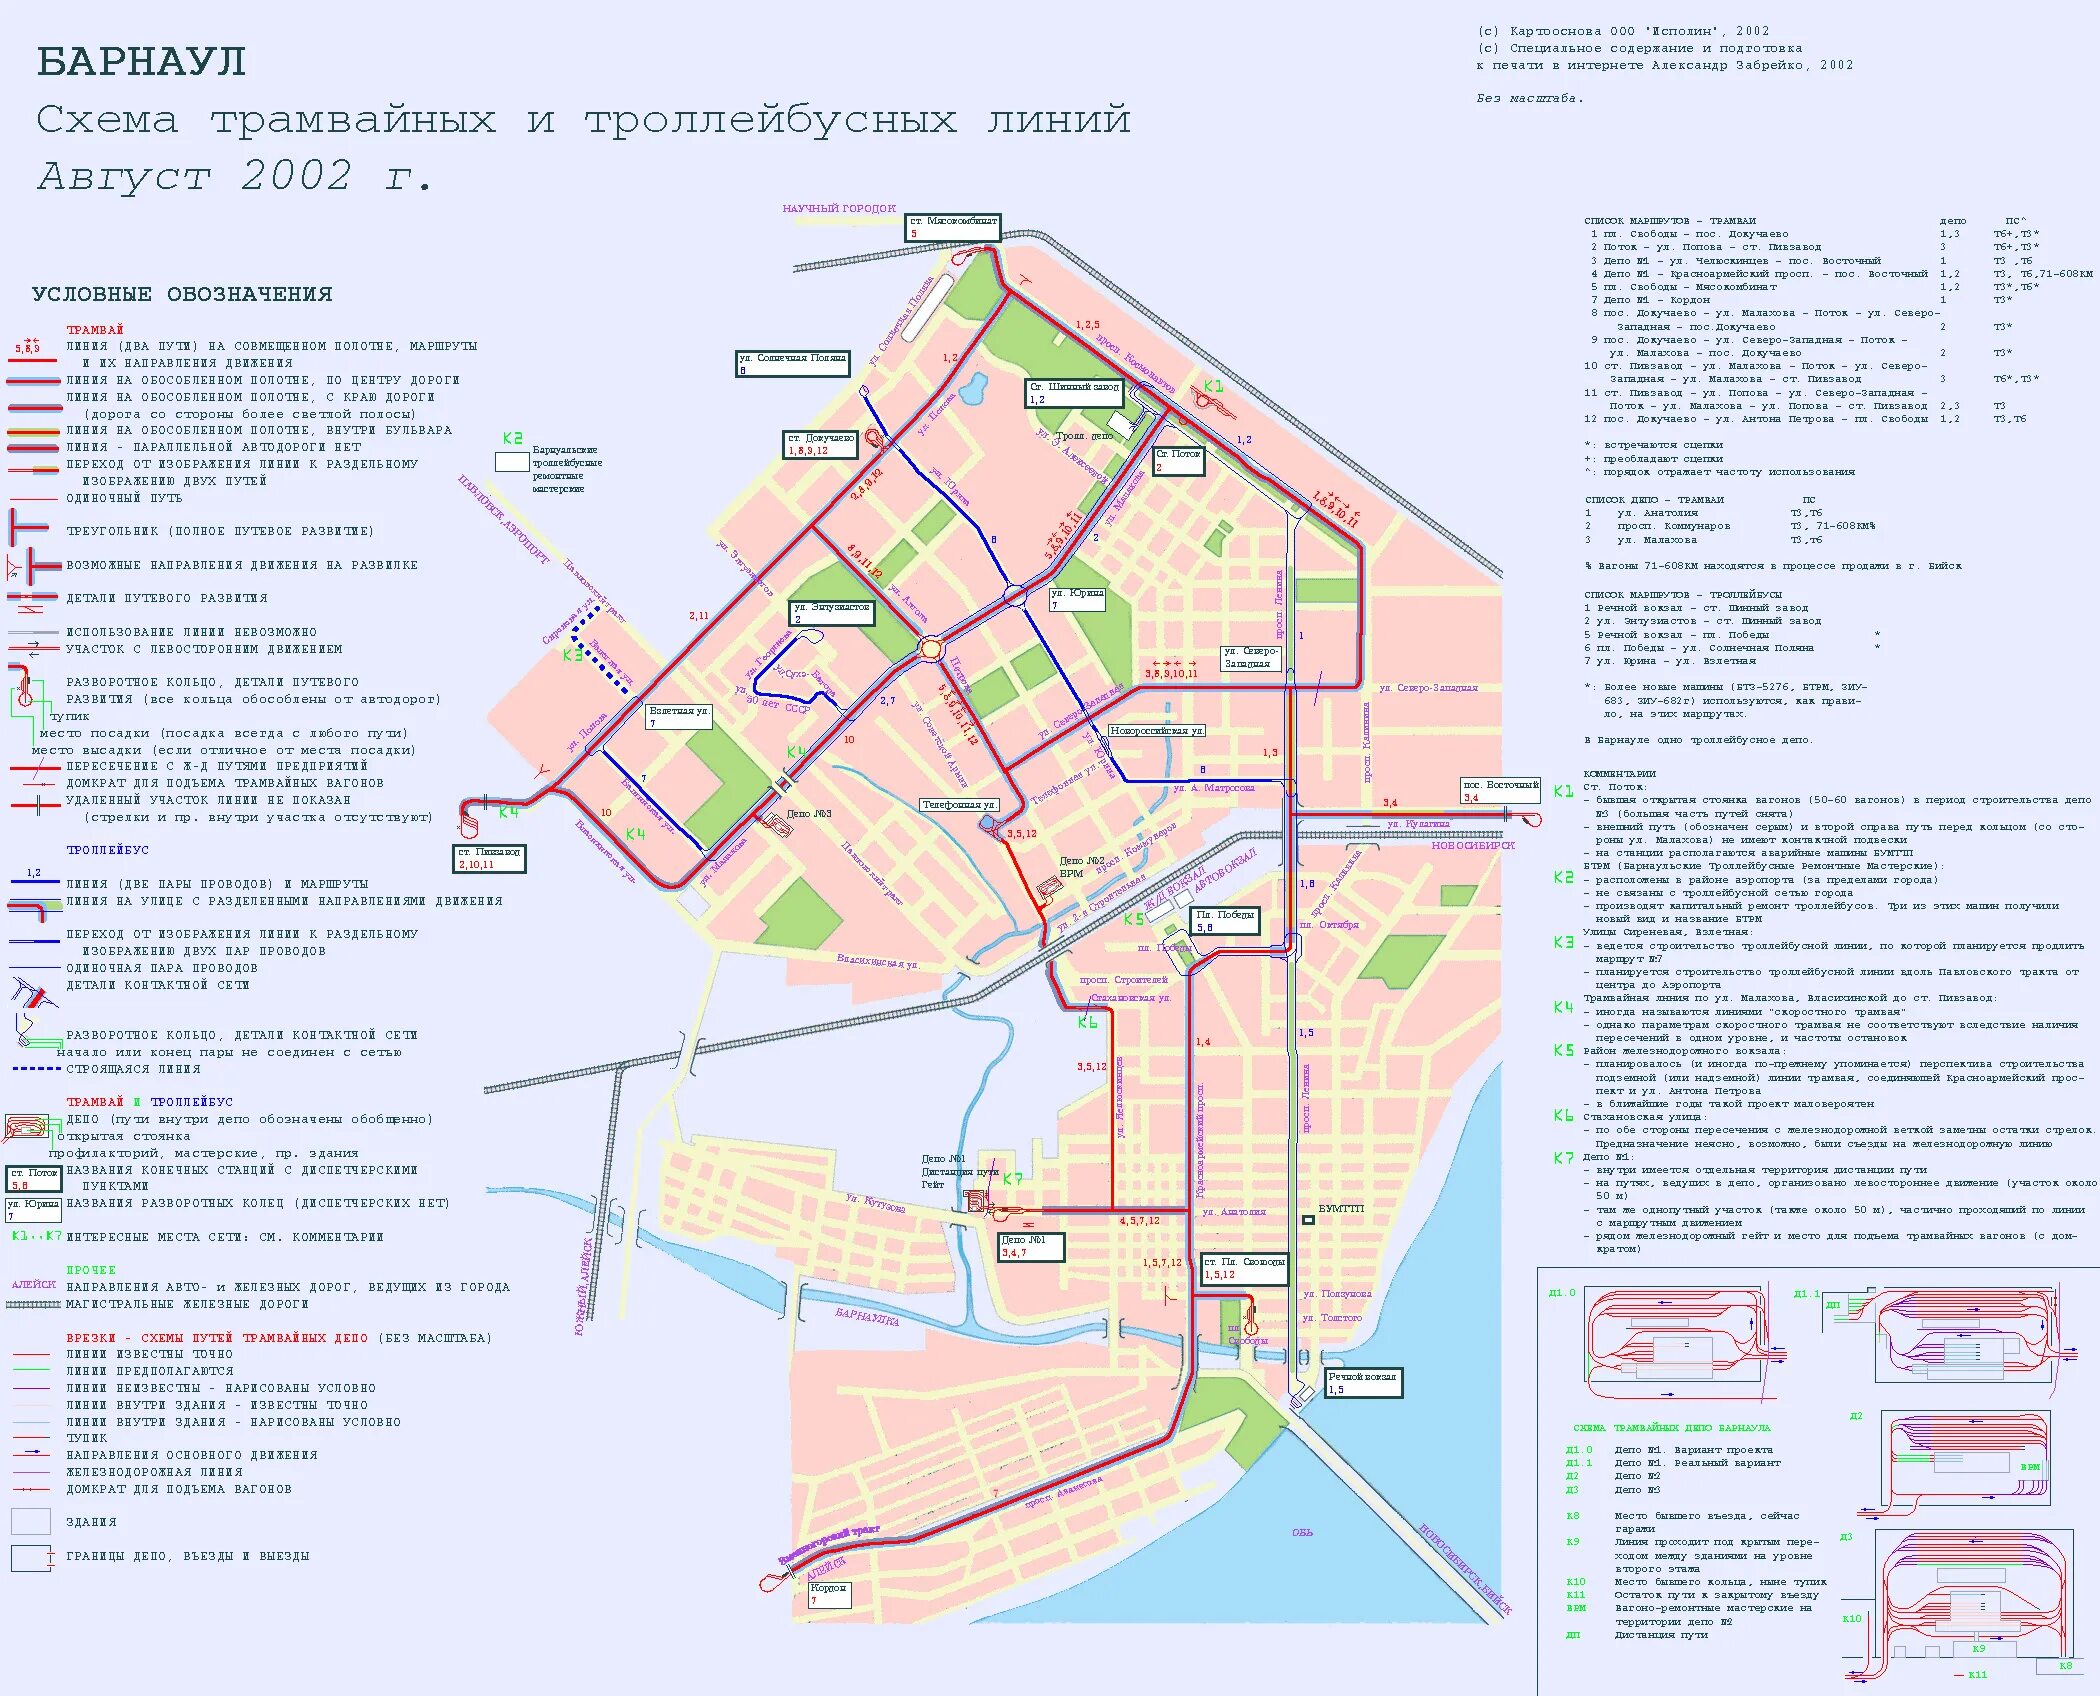 Трамваи барнаул маршруты расписание. Схема движения трамваев в Барнауле. Схема трамвайных маршрутов Барнаула. Схема трамвайных маршрутов Барнаула 2021. Трамвайные пути Барнаул схема.